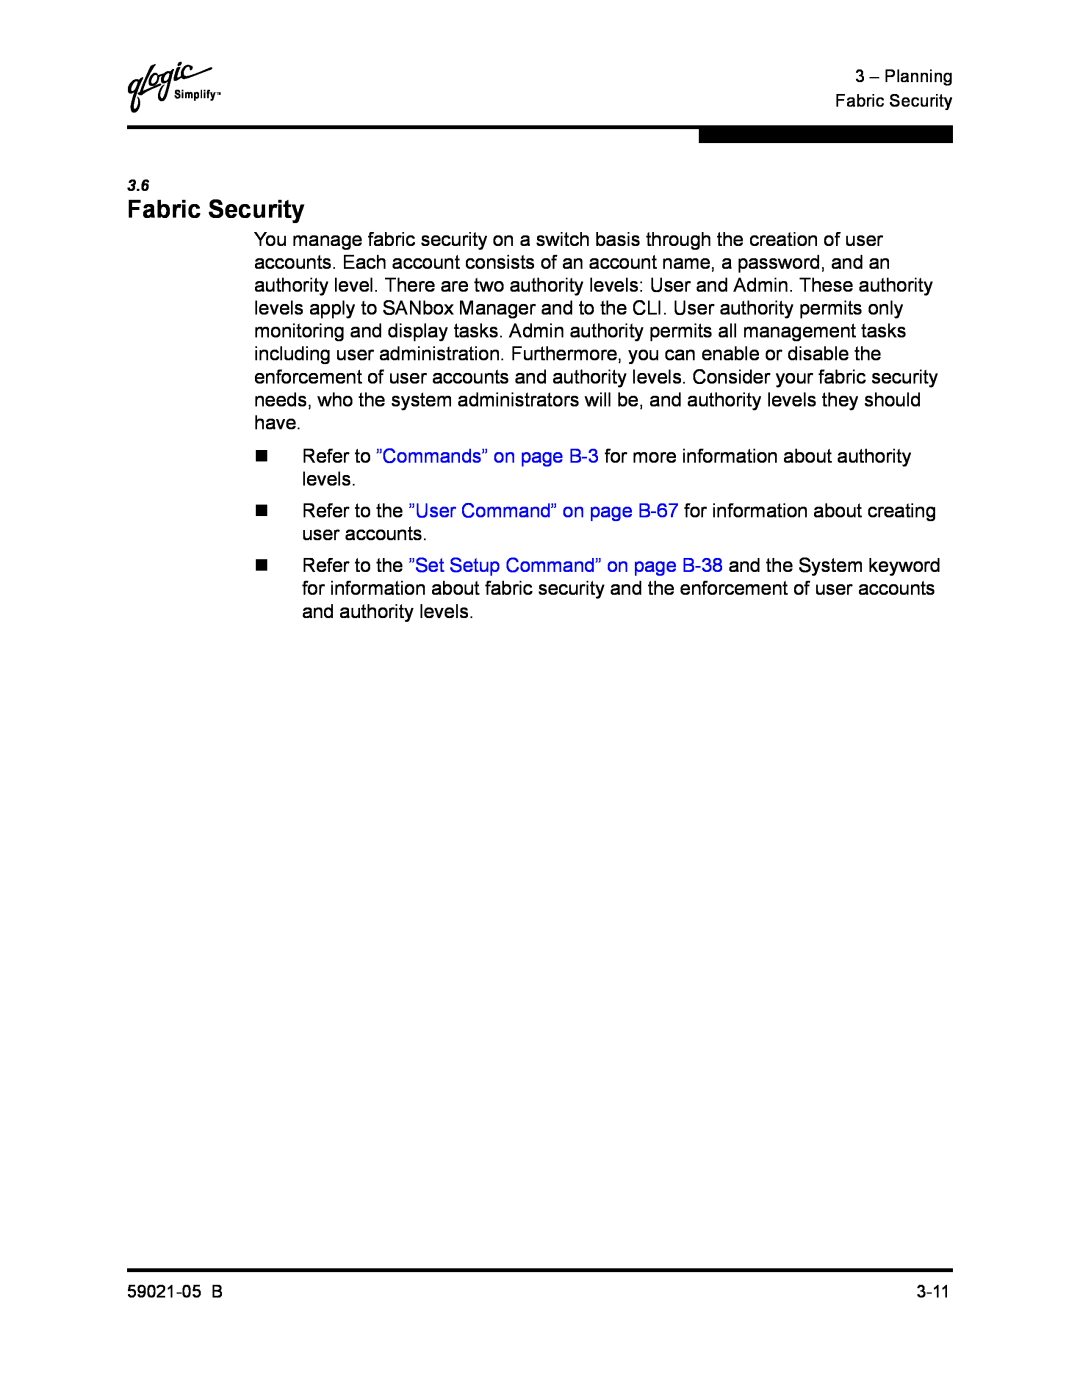 Q-Logic 59021-05 B manual Fabric Security 